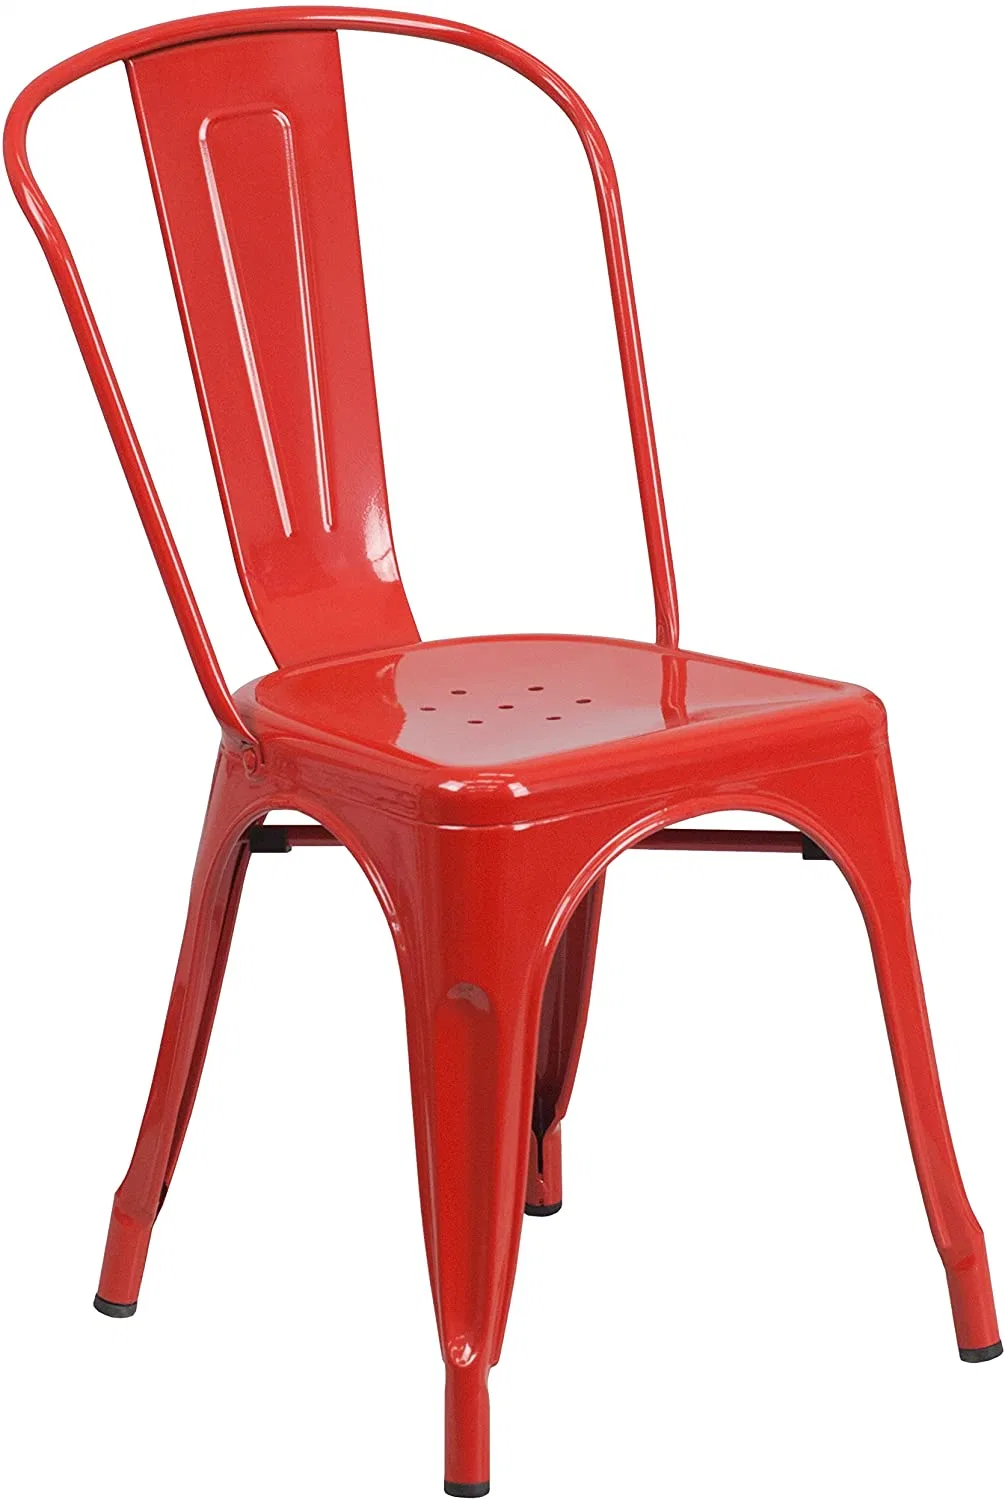 Commercial Grade Yellow Metal Indoor-Outdoor Stackable Chair Tolix Chair Industrial Dining Chair